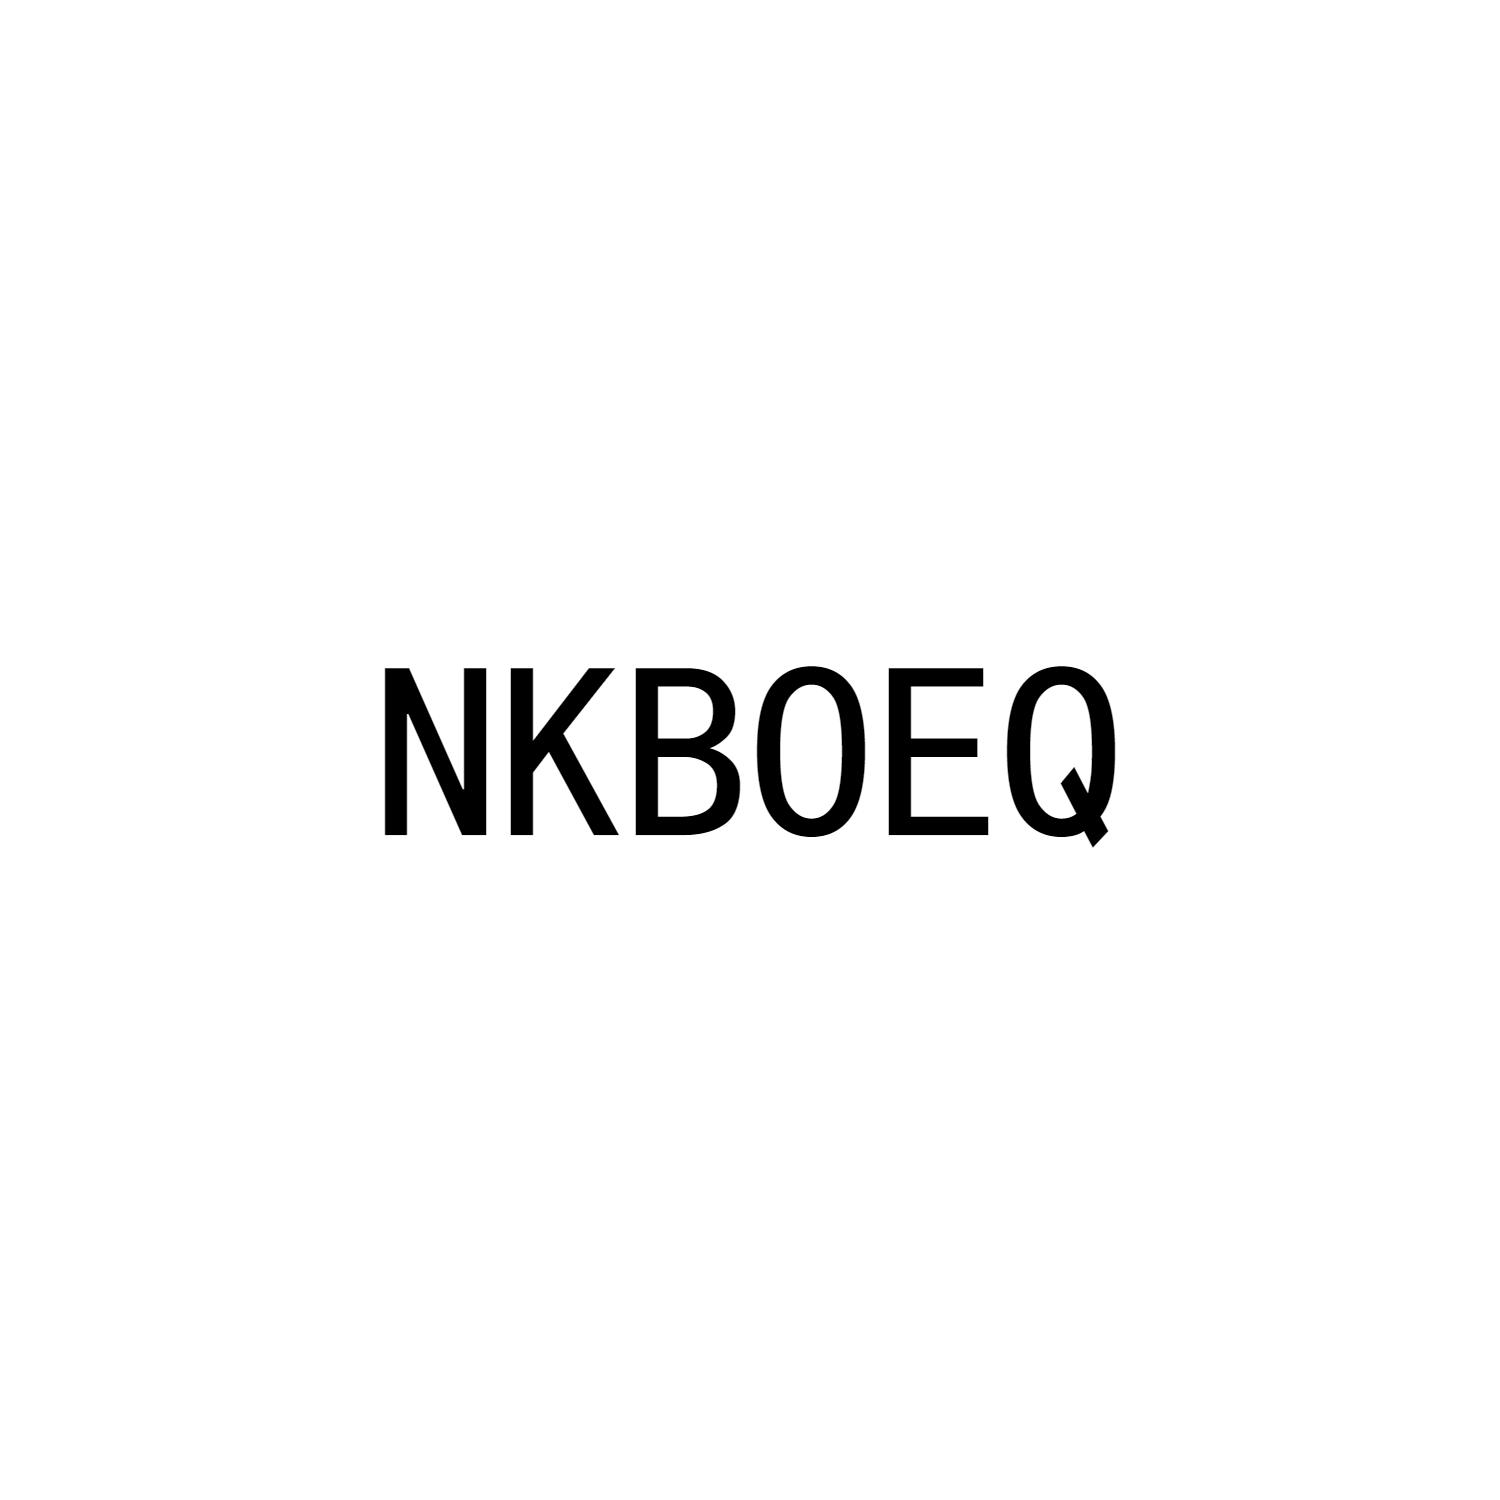 NKBOEQ